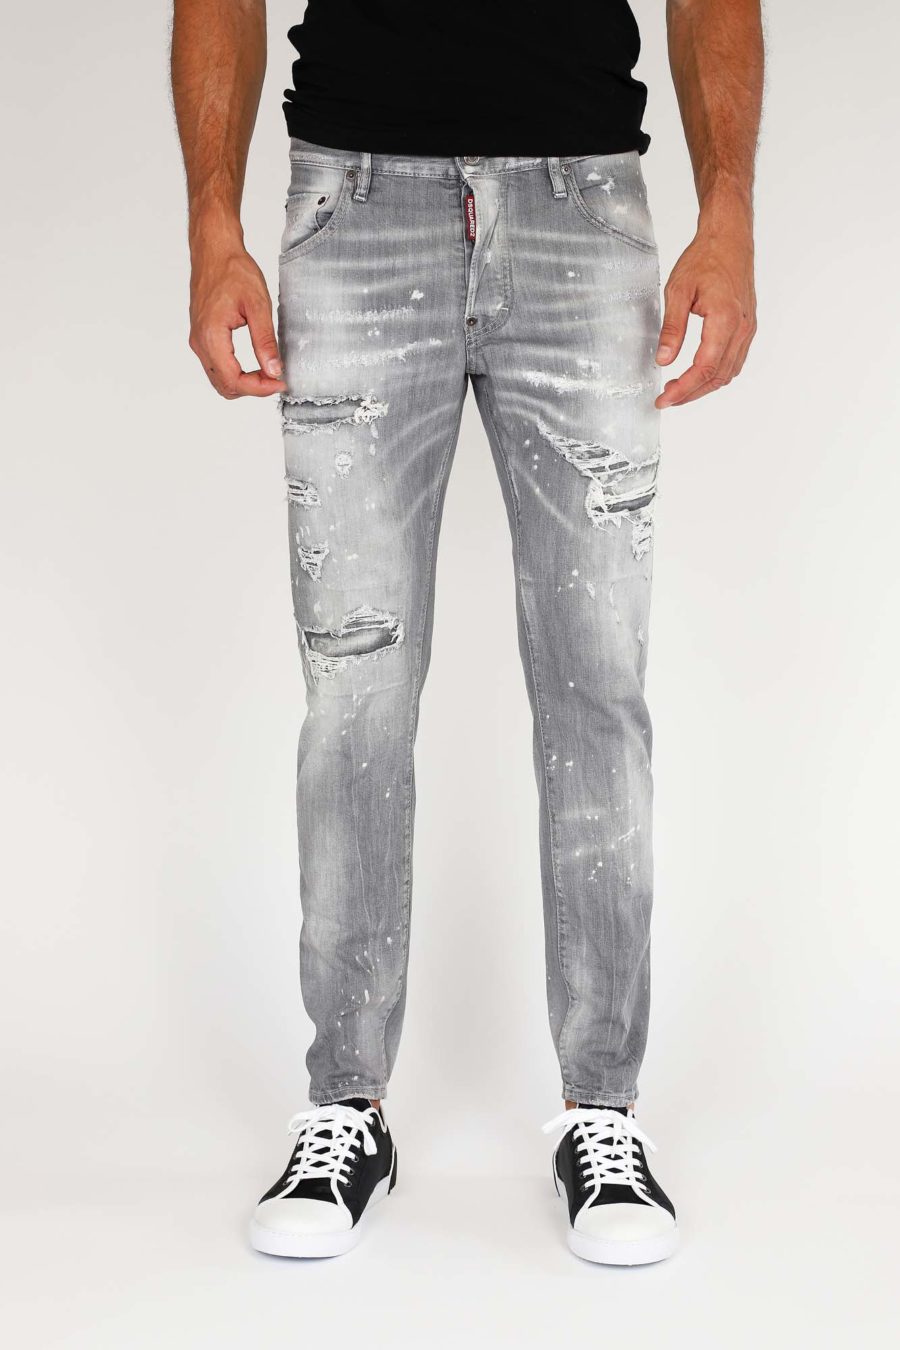 Skater-Jeans "Skater" grau getragen - IMG 9821